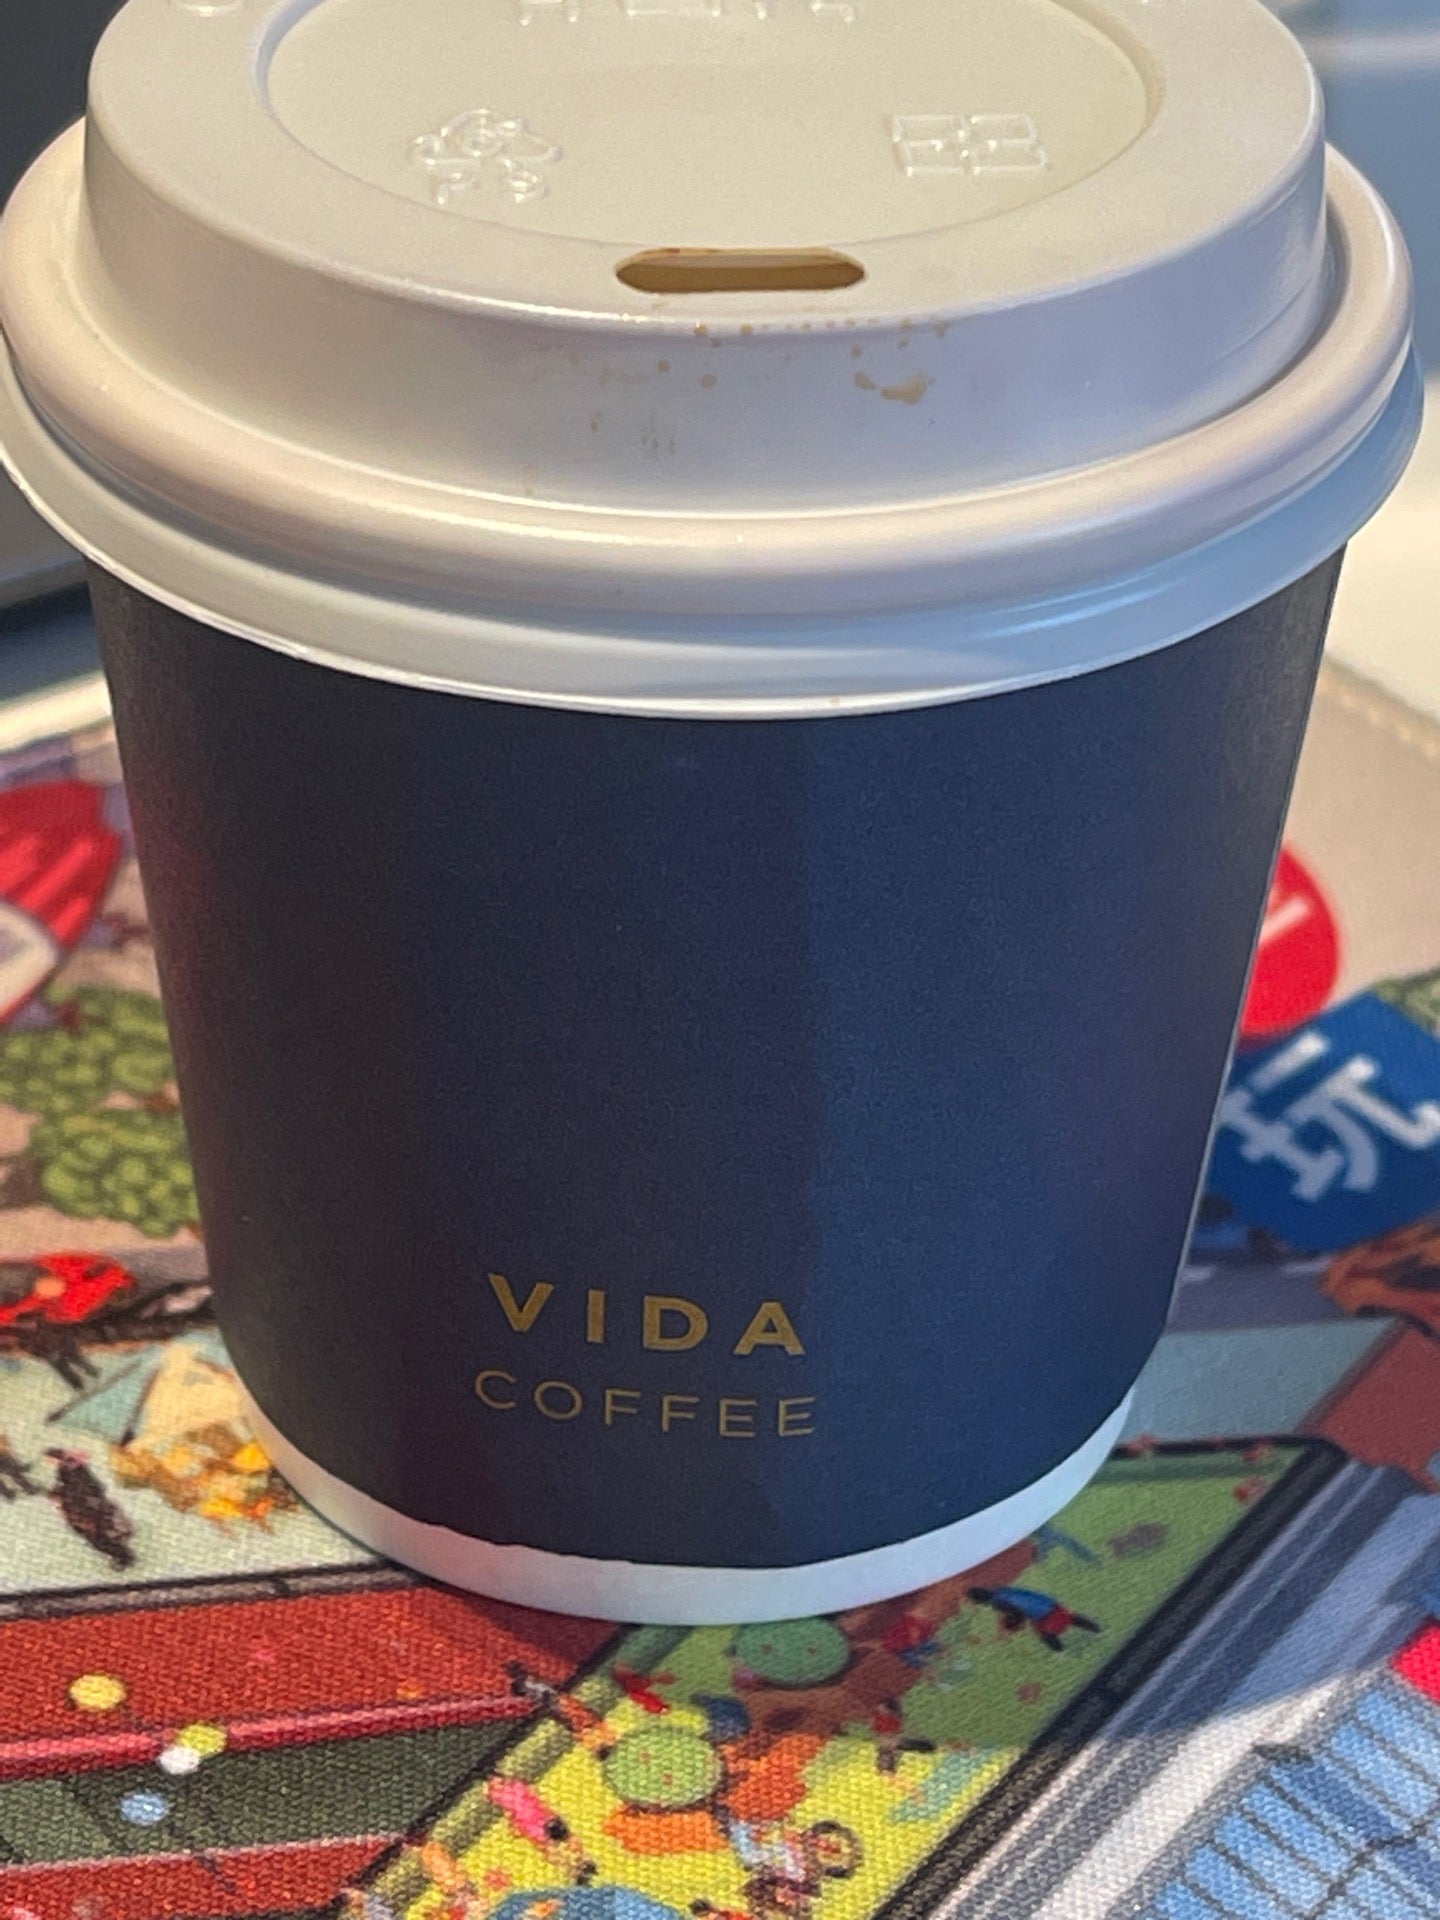 Vida Coffee Stand